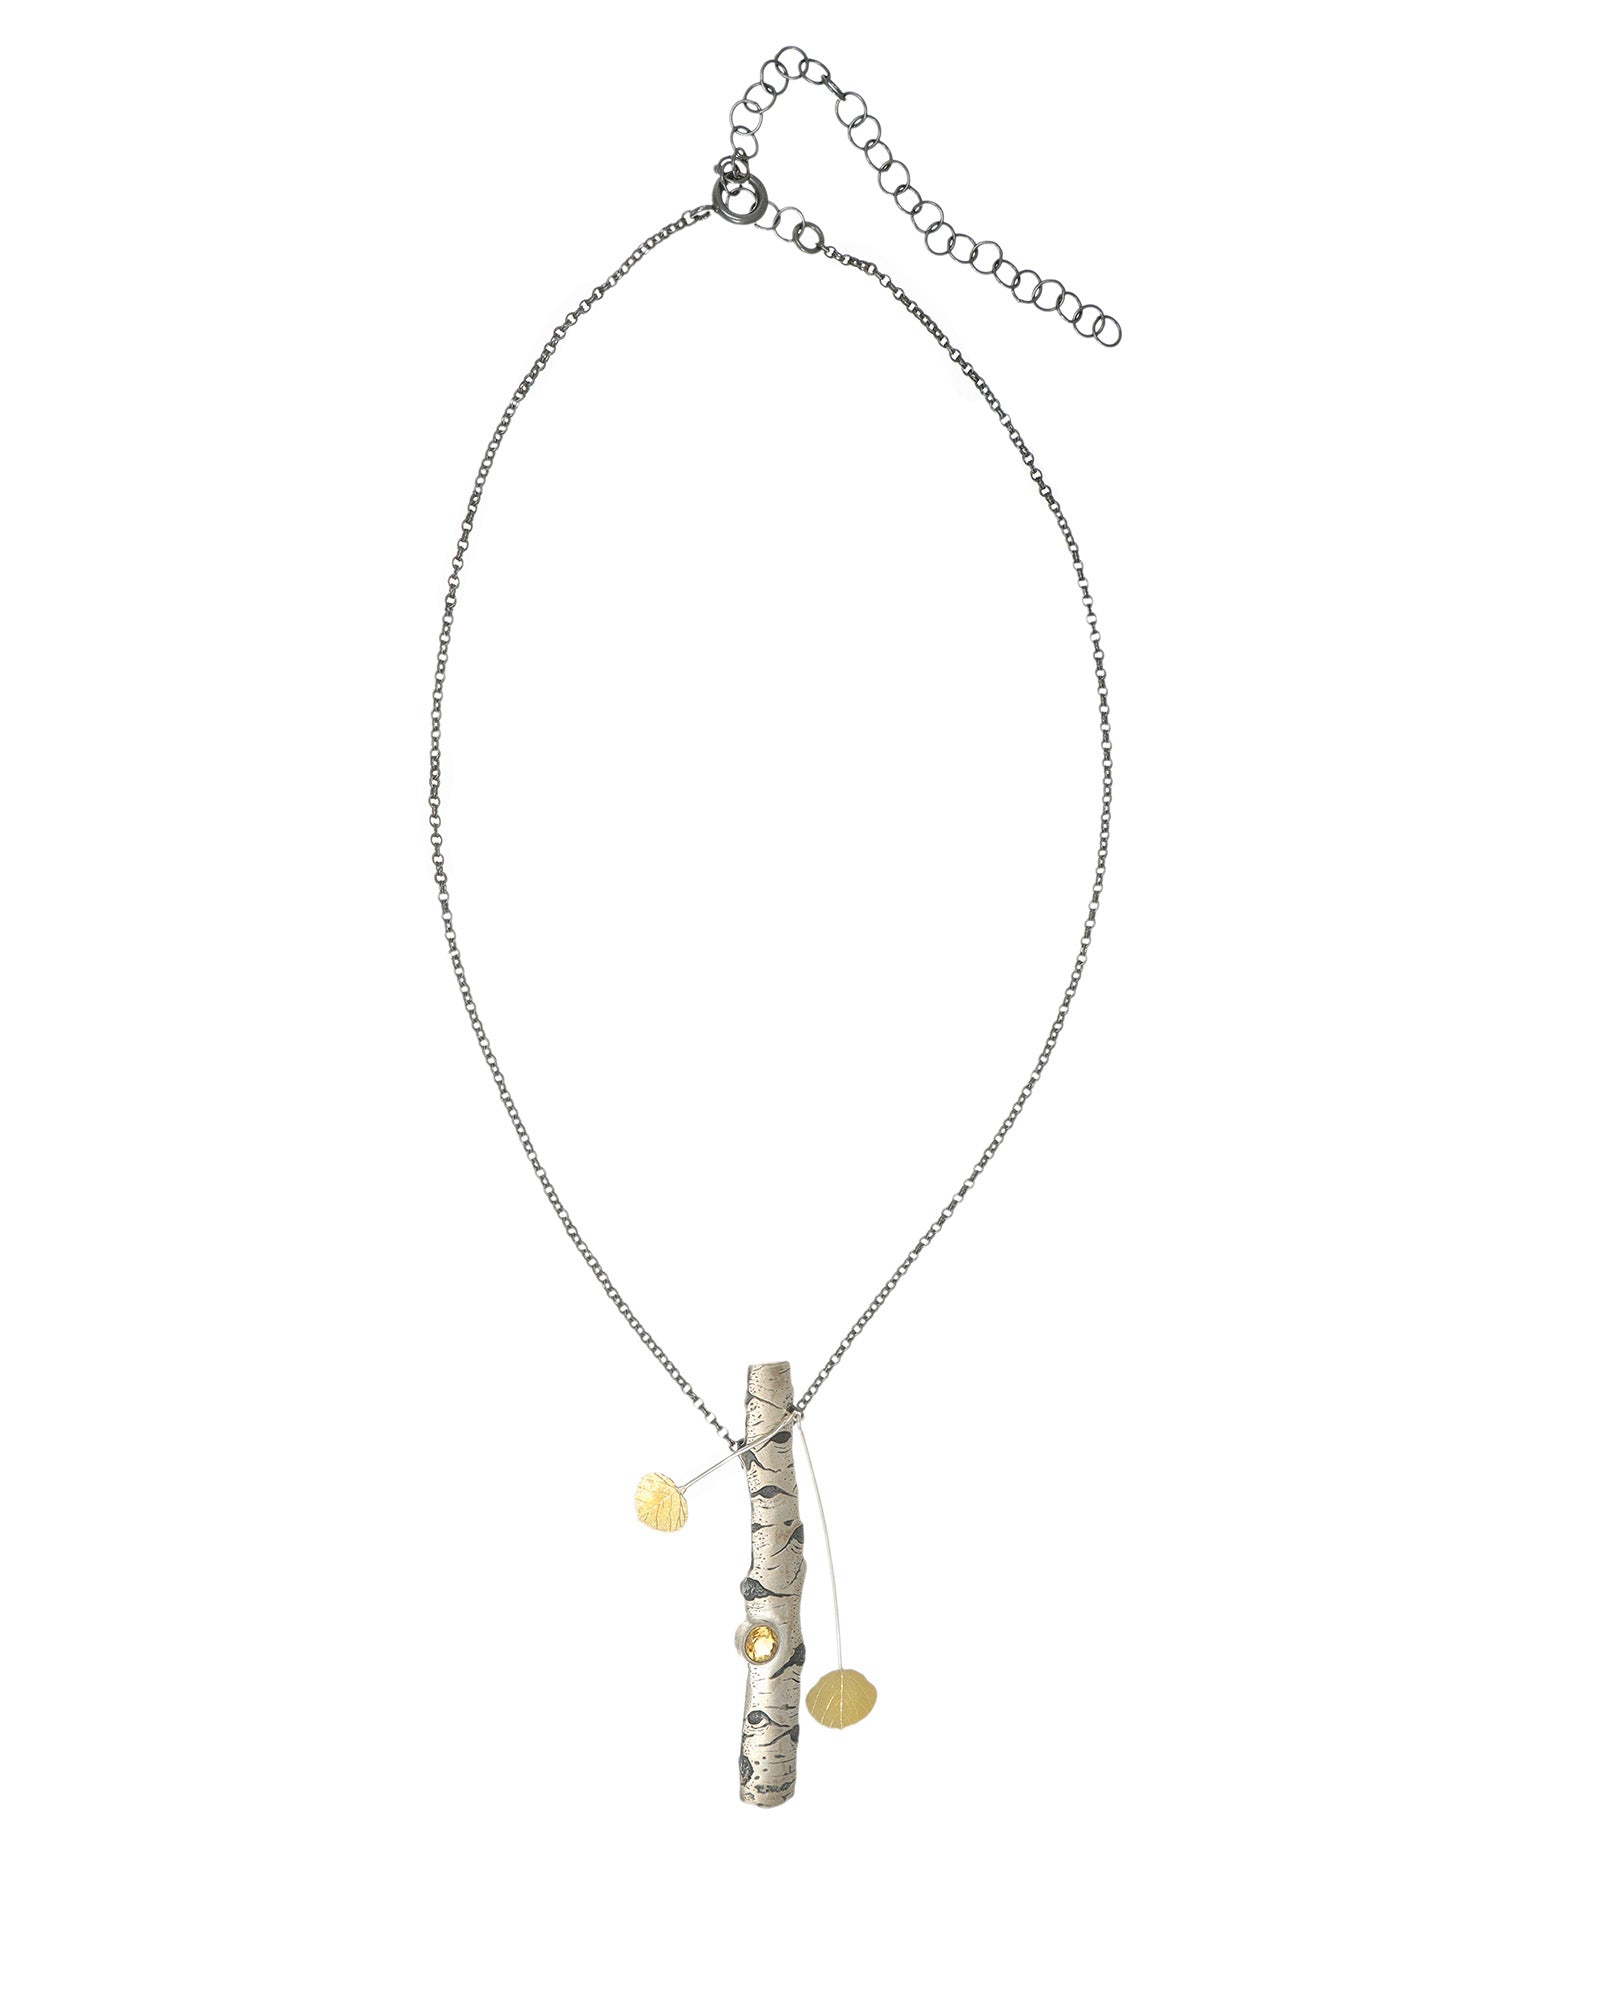 Aspen Allure pendant with Citrine